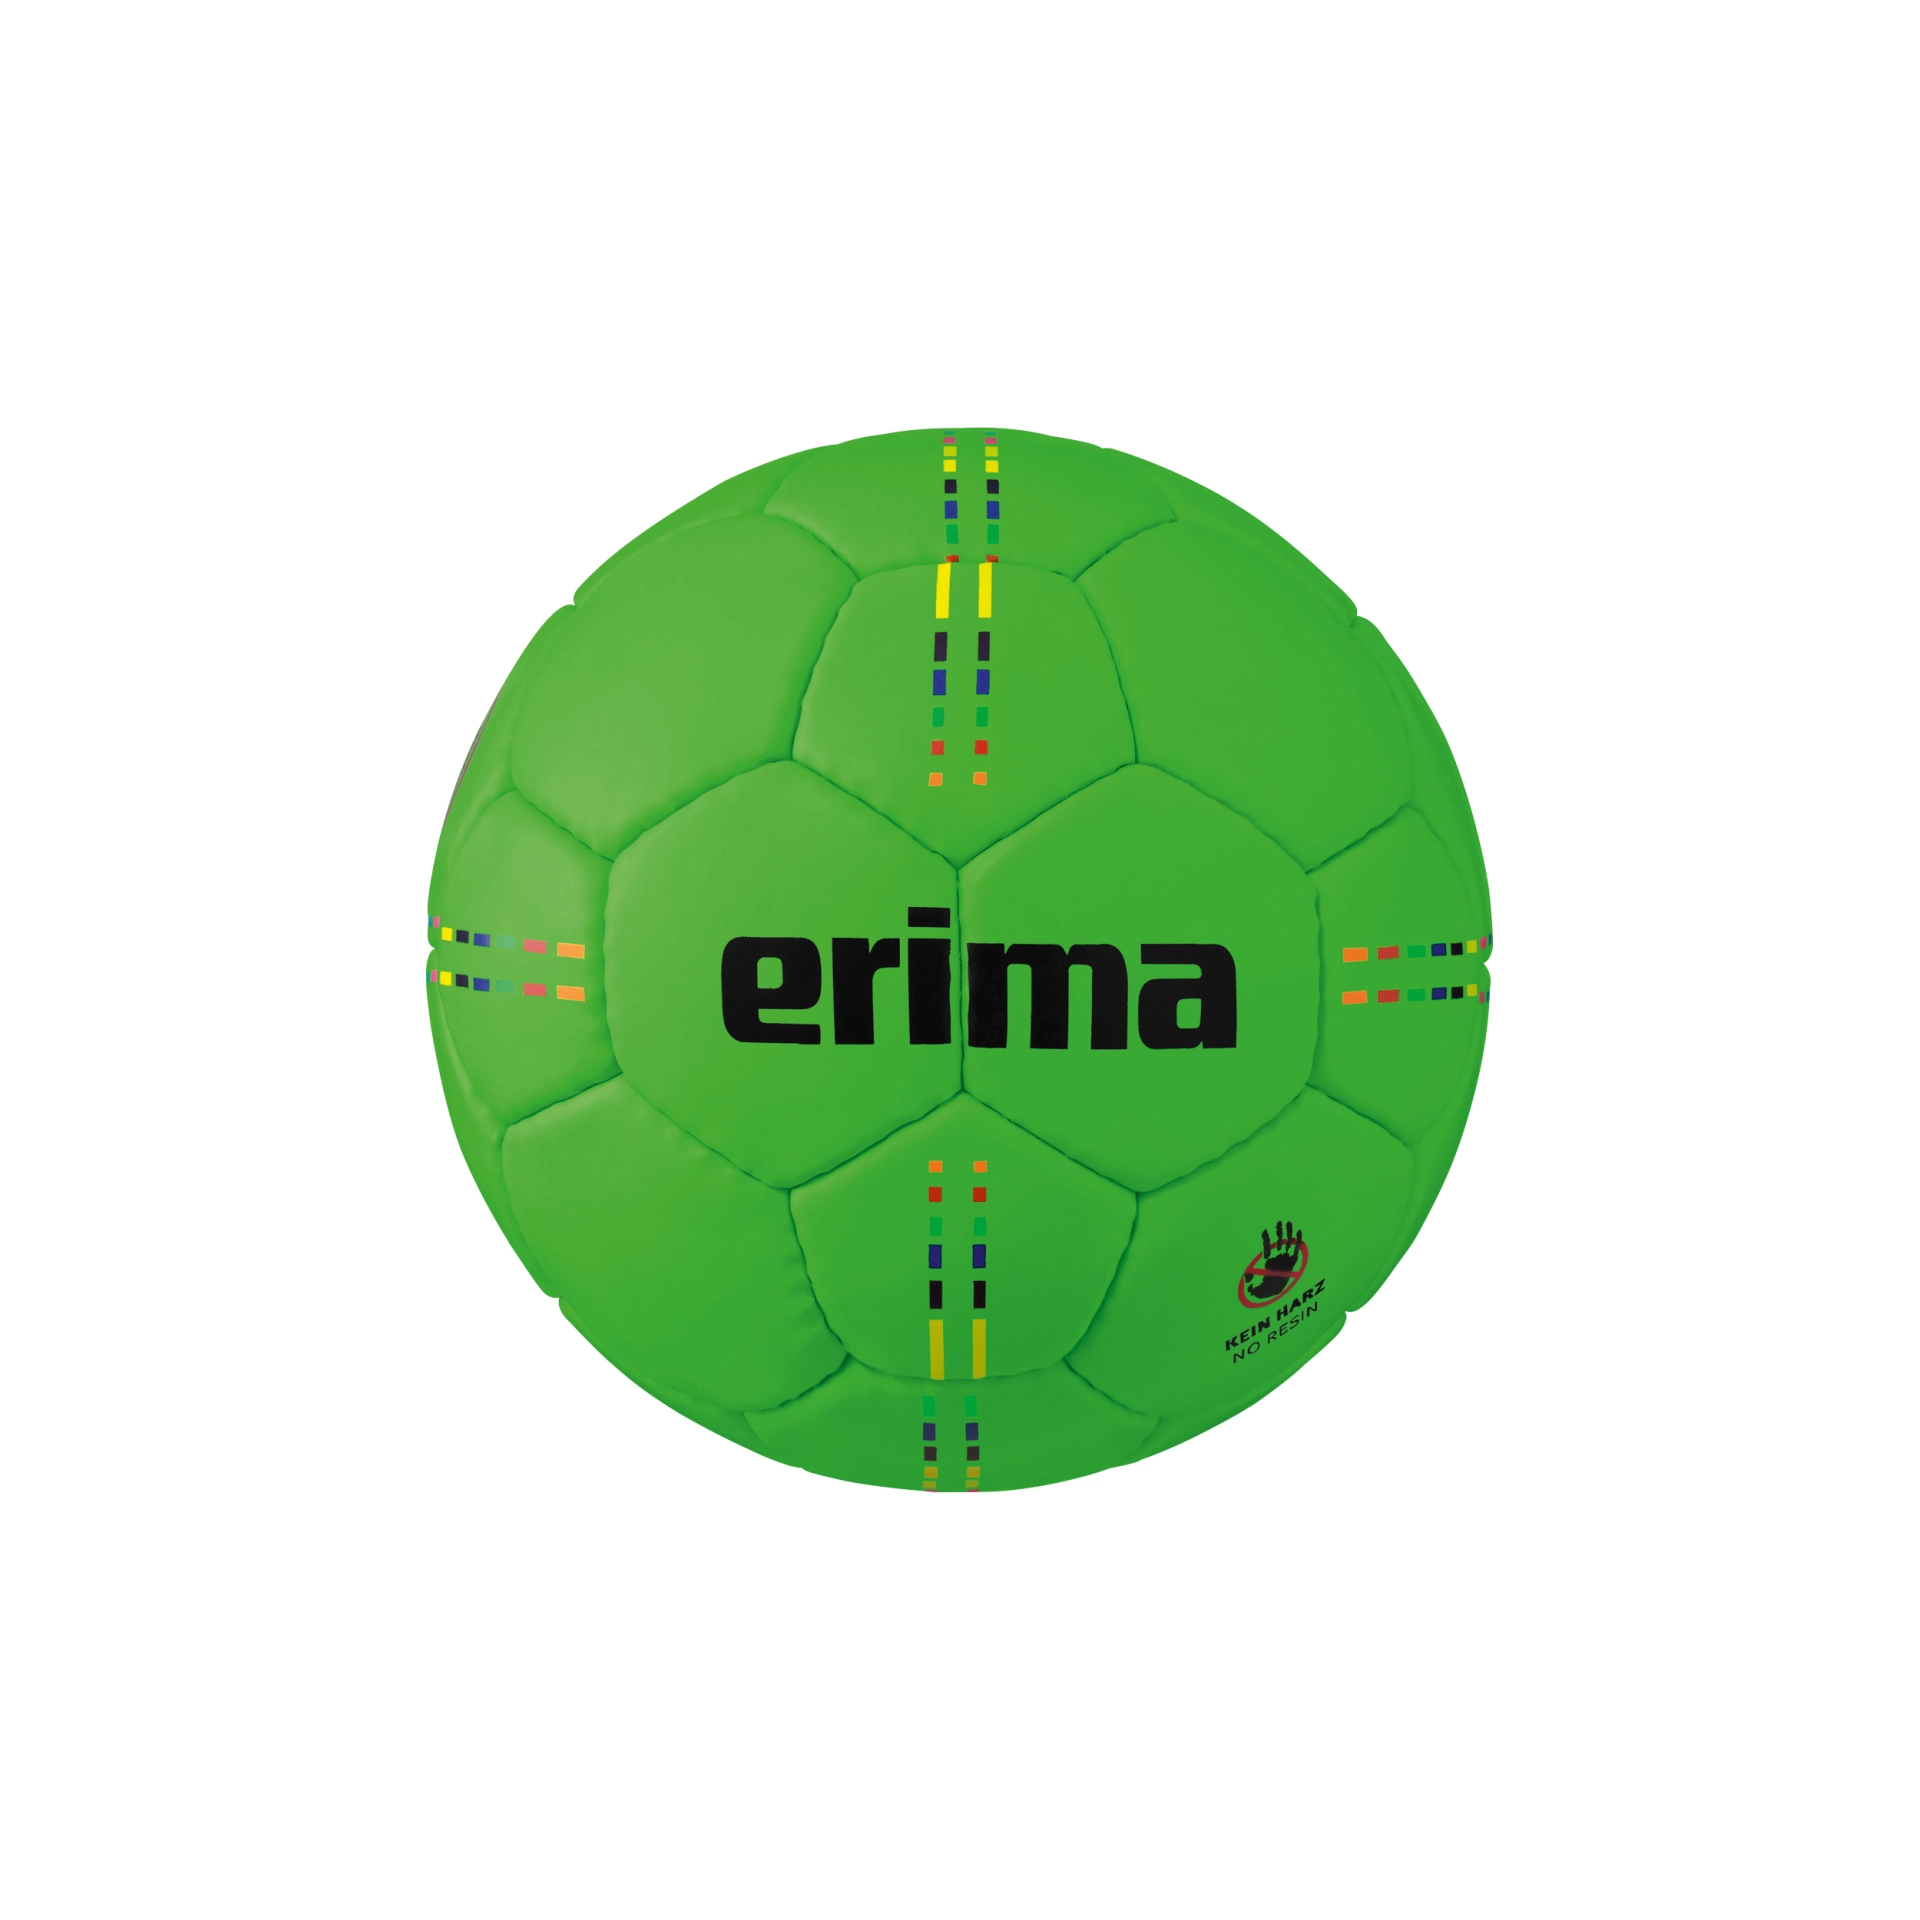 ERIMA PURE_GRIP_No_5___Waxfree 7202304 636 green